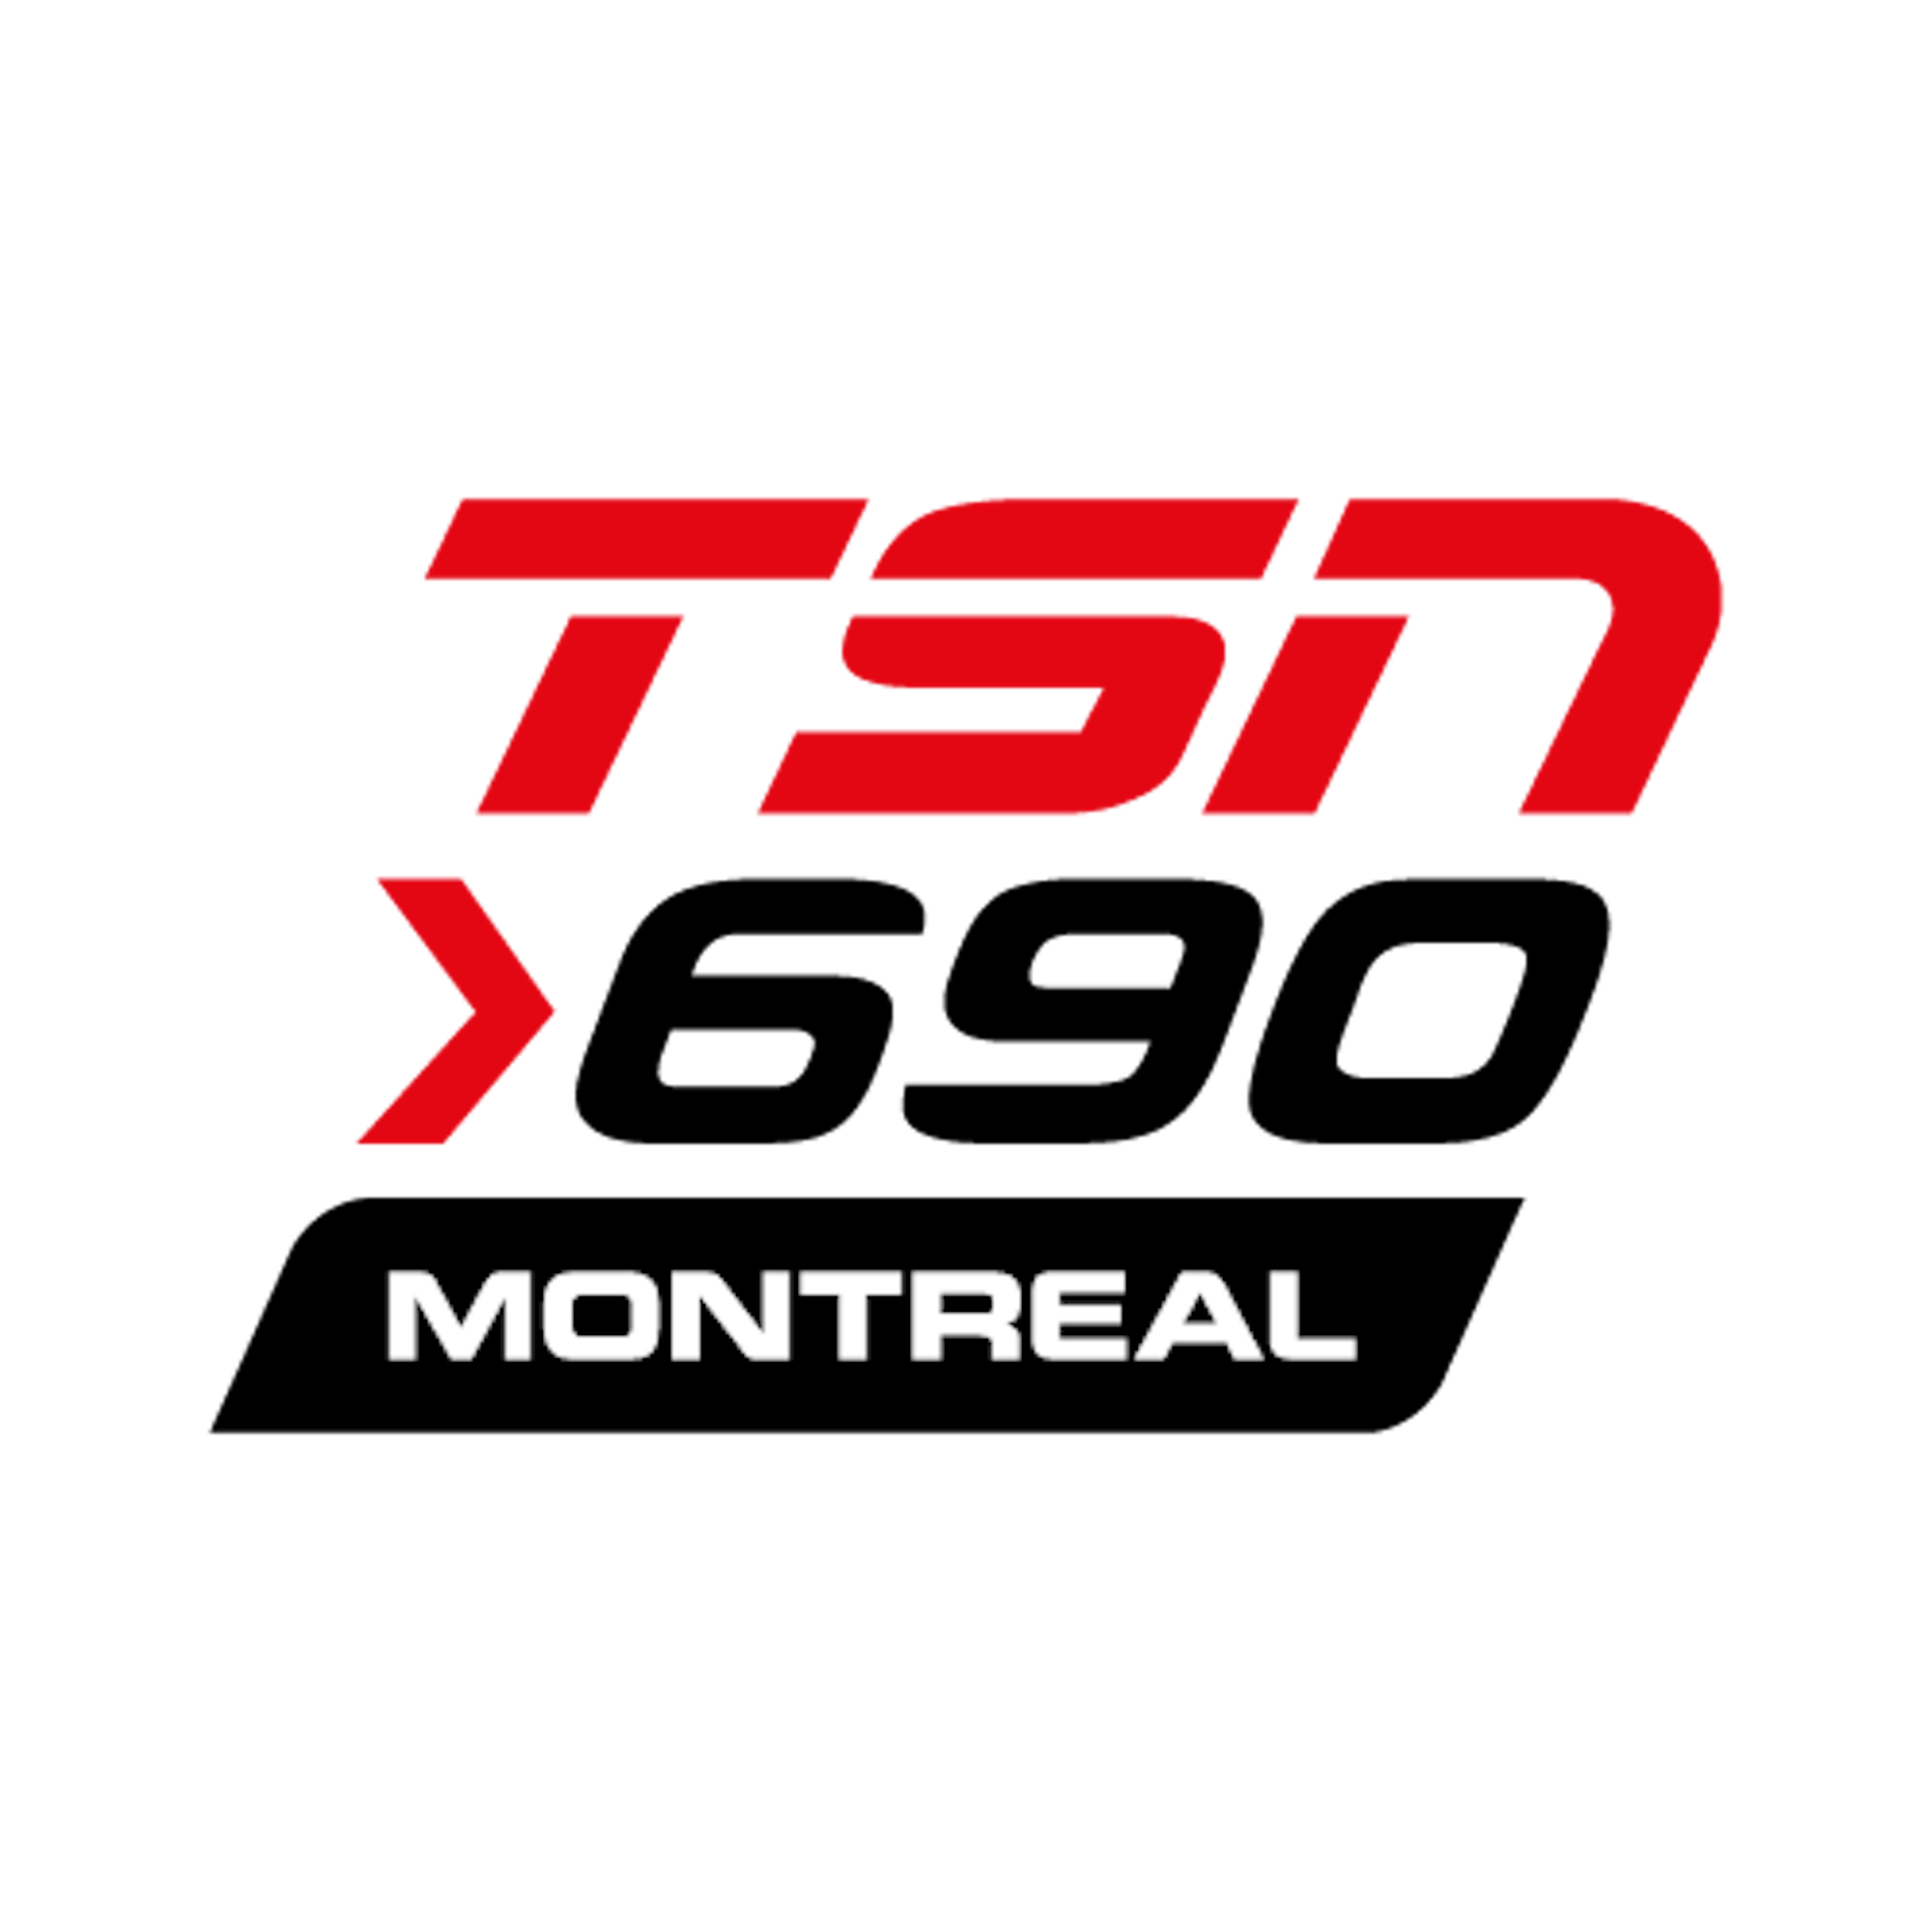 TSN 690 Montreal logo